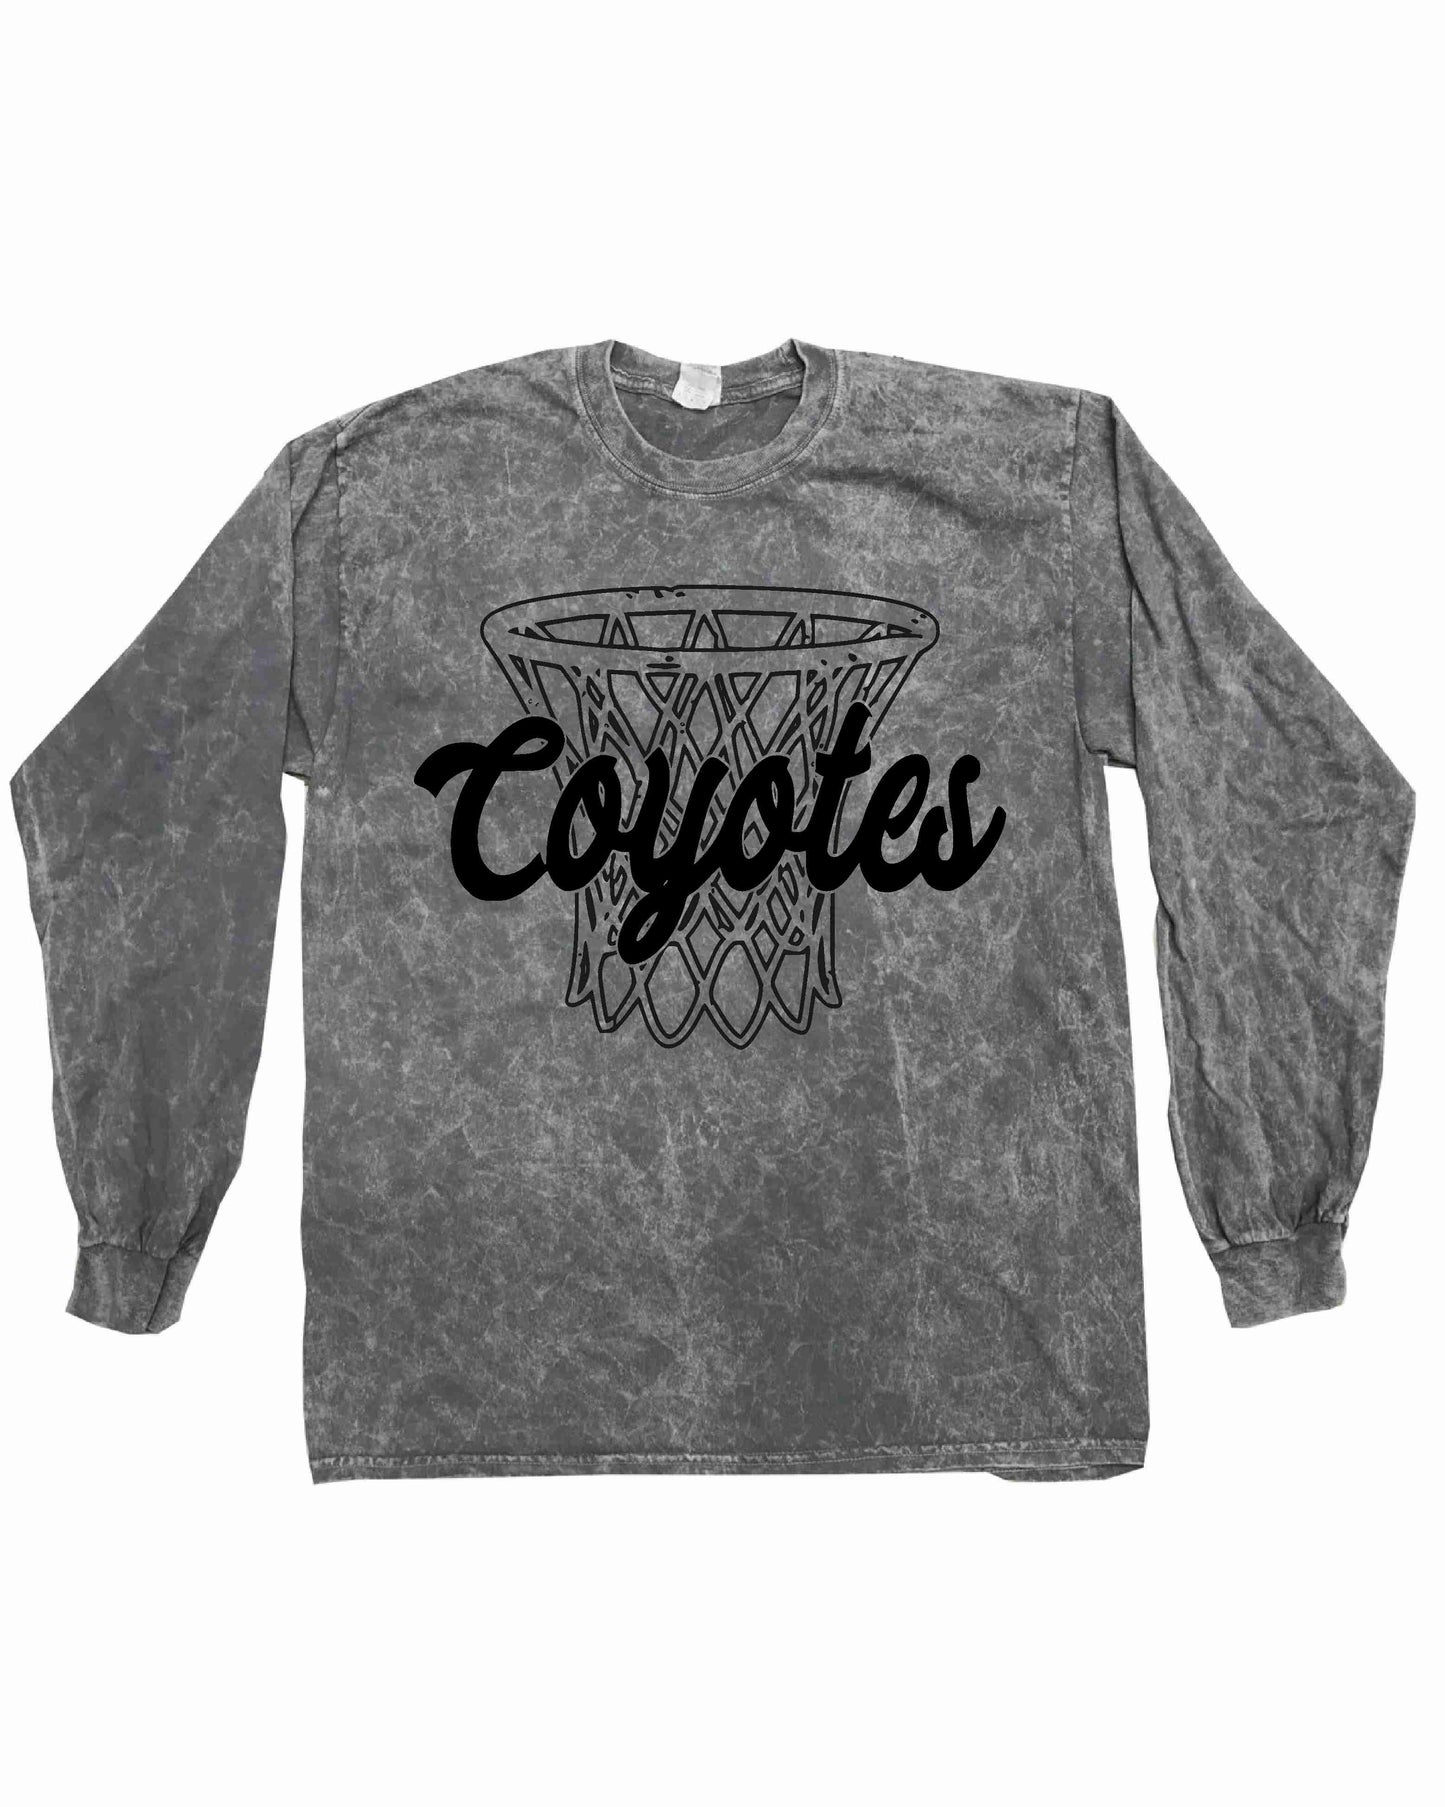 Coyotes - Grunge Basketball Nets - Short & Long Sleeve